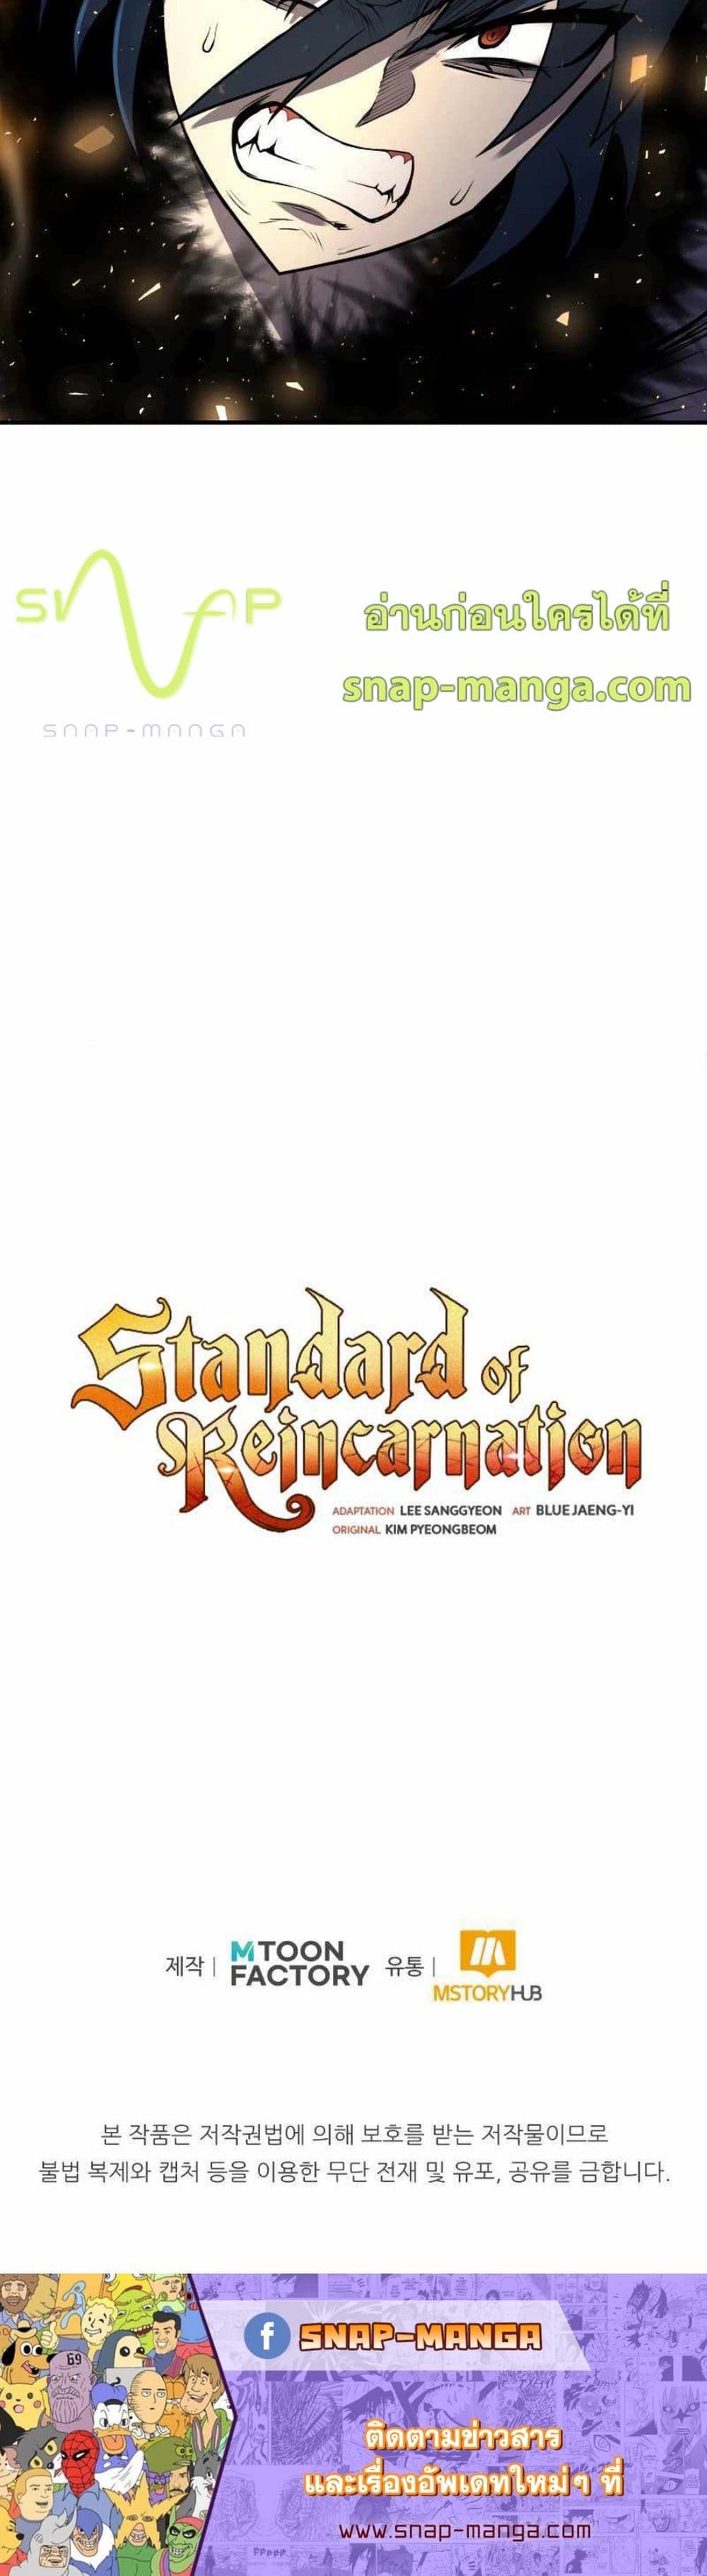 Standard of Reincarnation 27-27